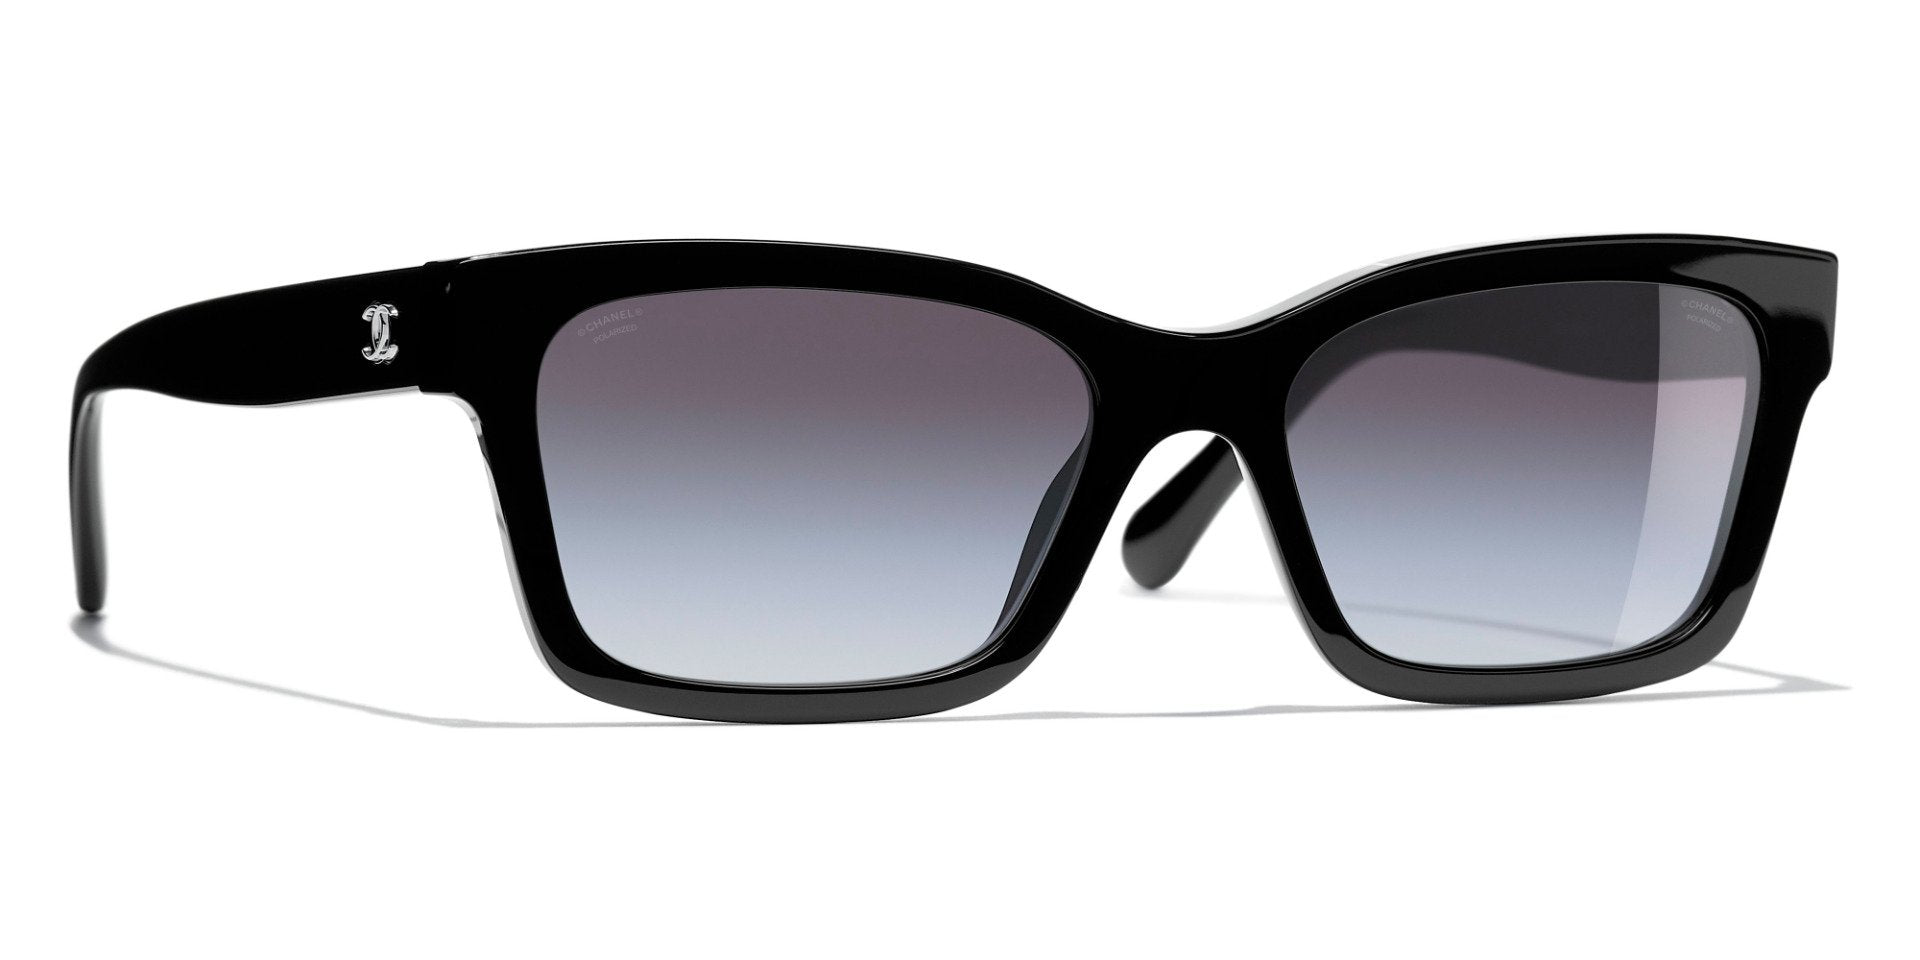 Chanel Women's Ch5411 54mm Polarized Sunglasses in Black